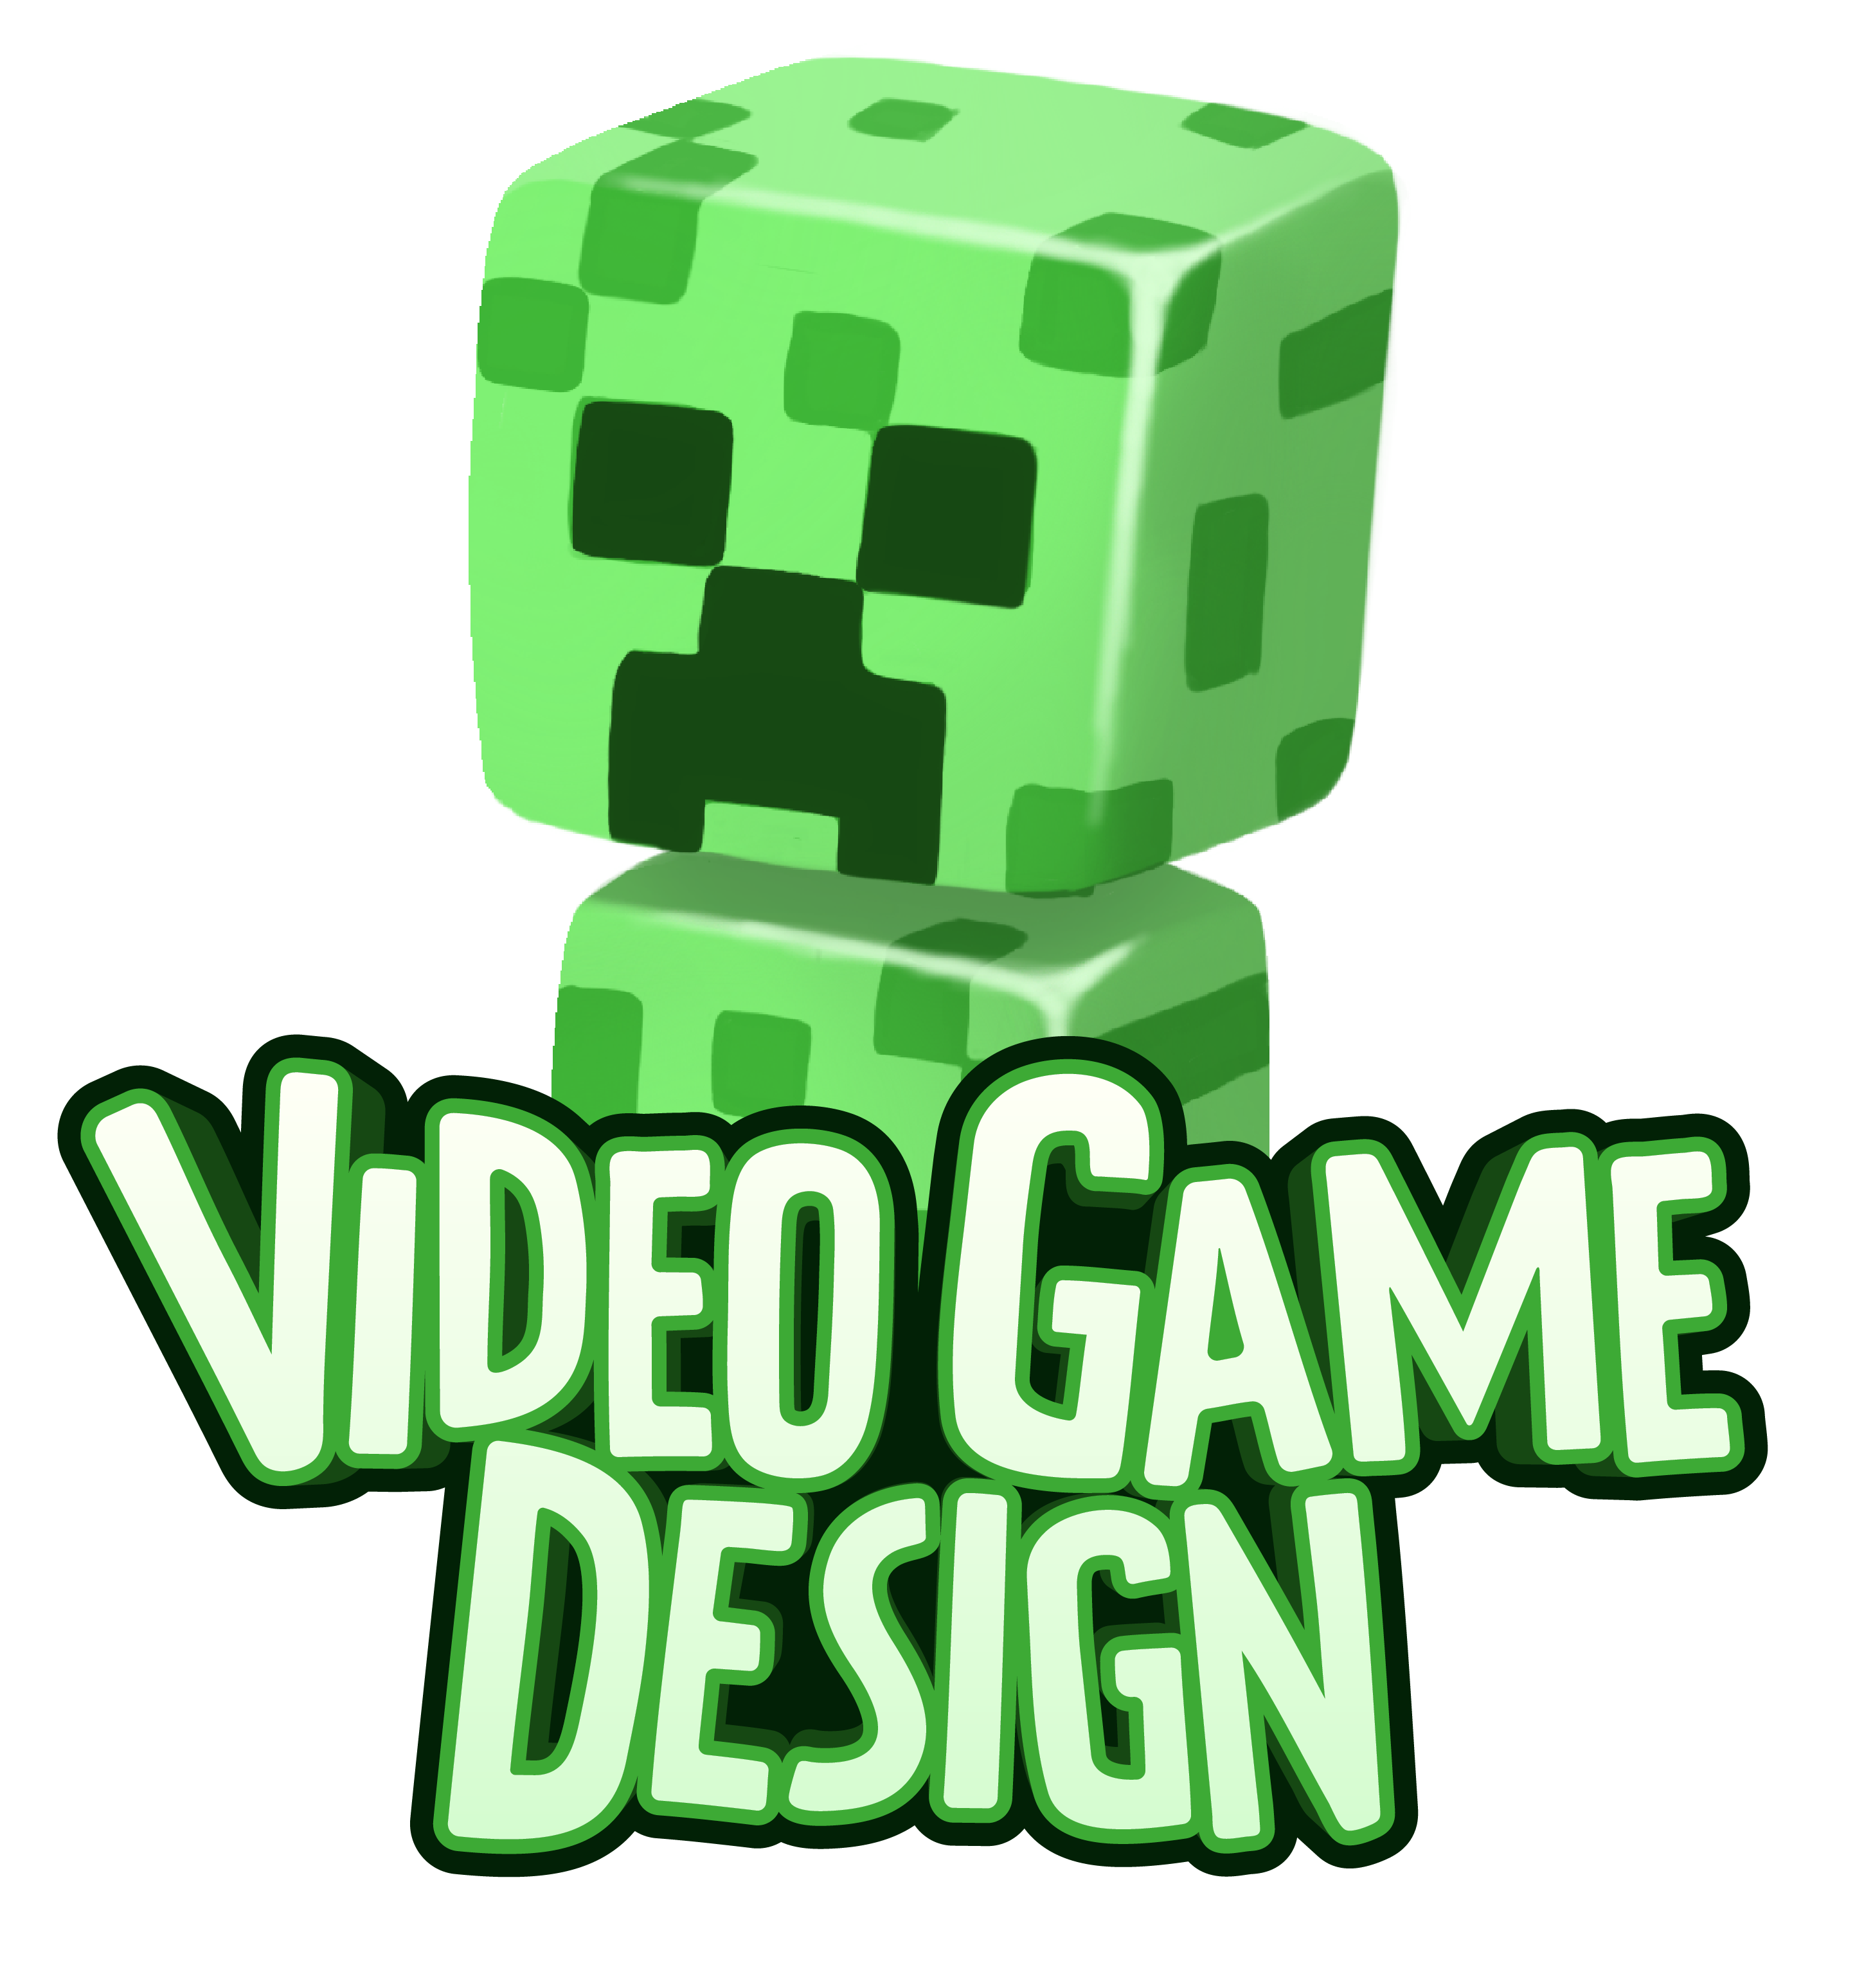 Video Game Design Camp